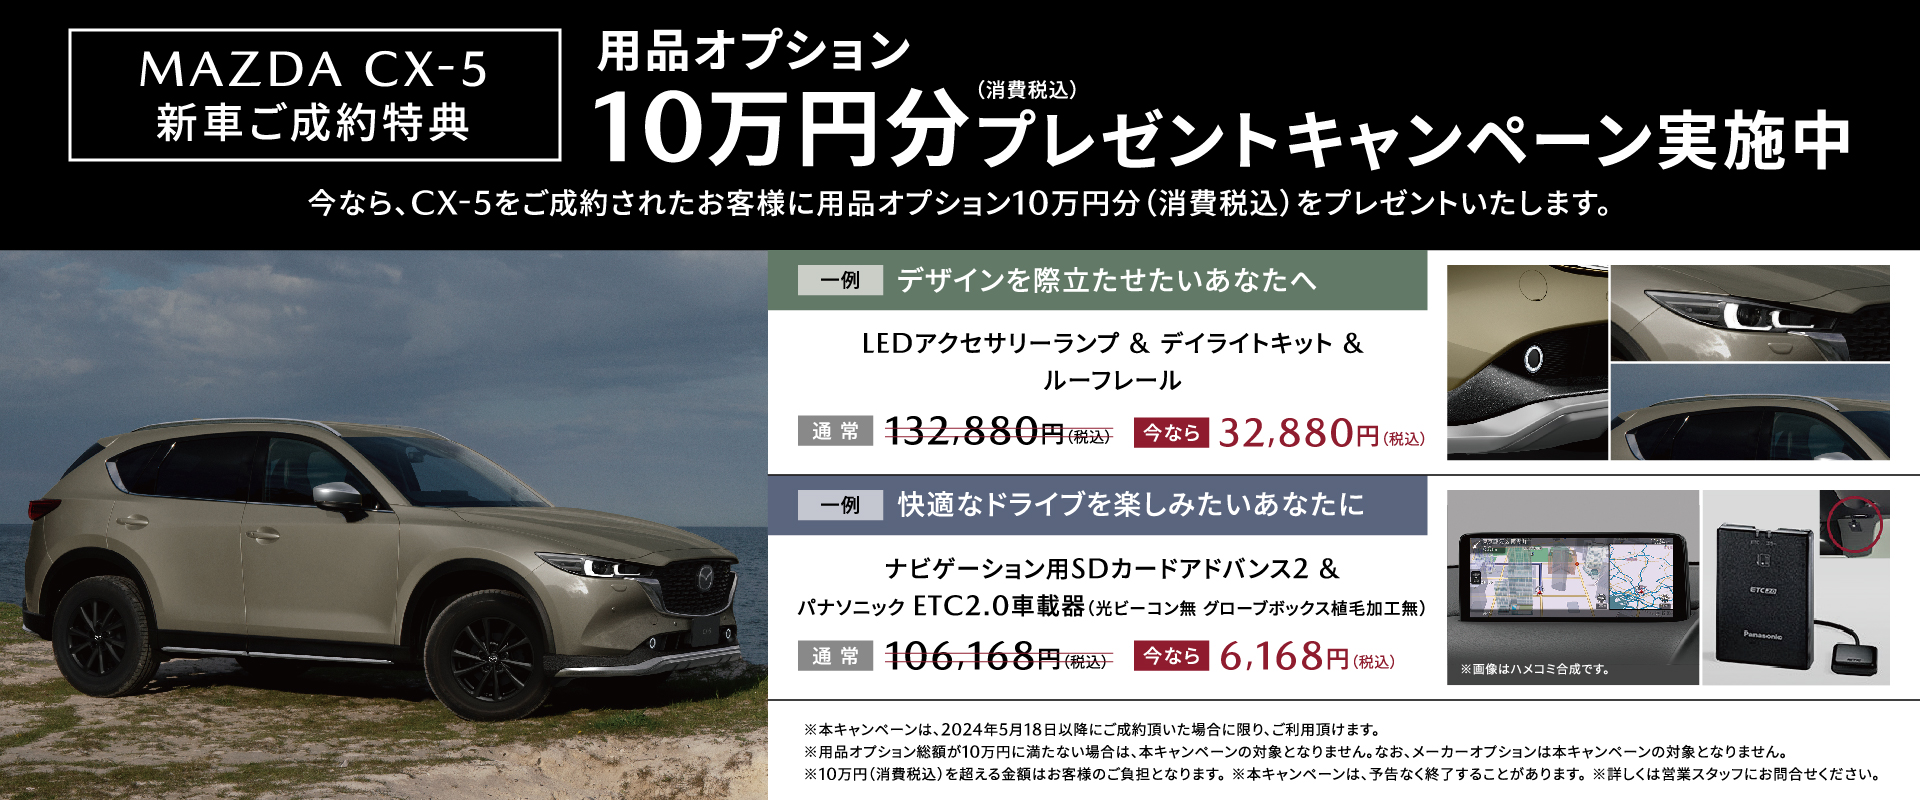 CX-5 10万円分プレゼントキャンペーン